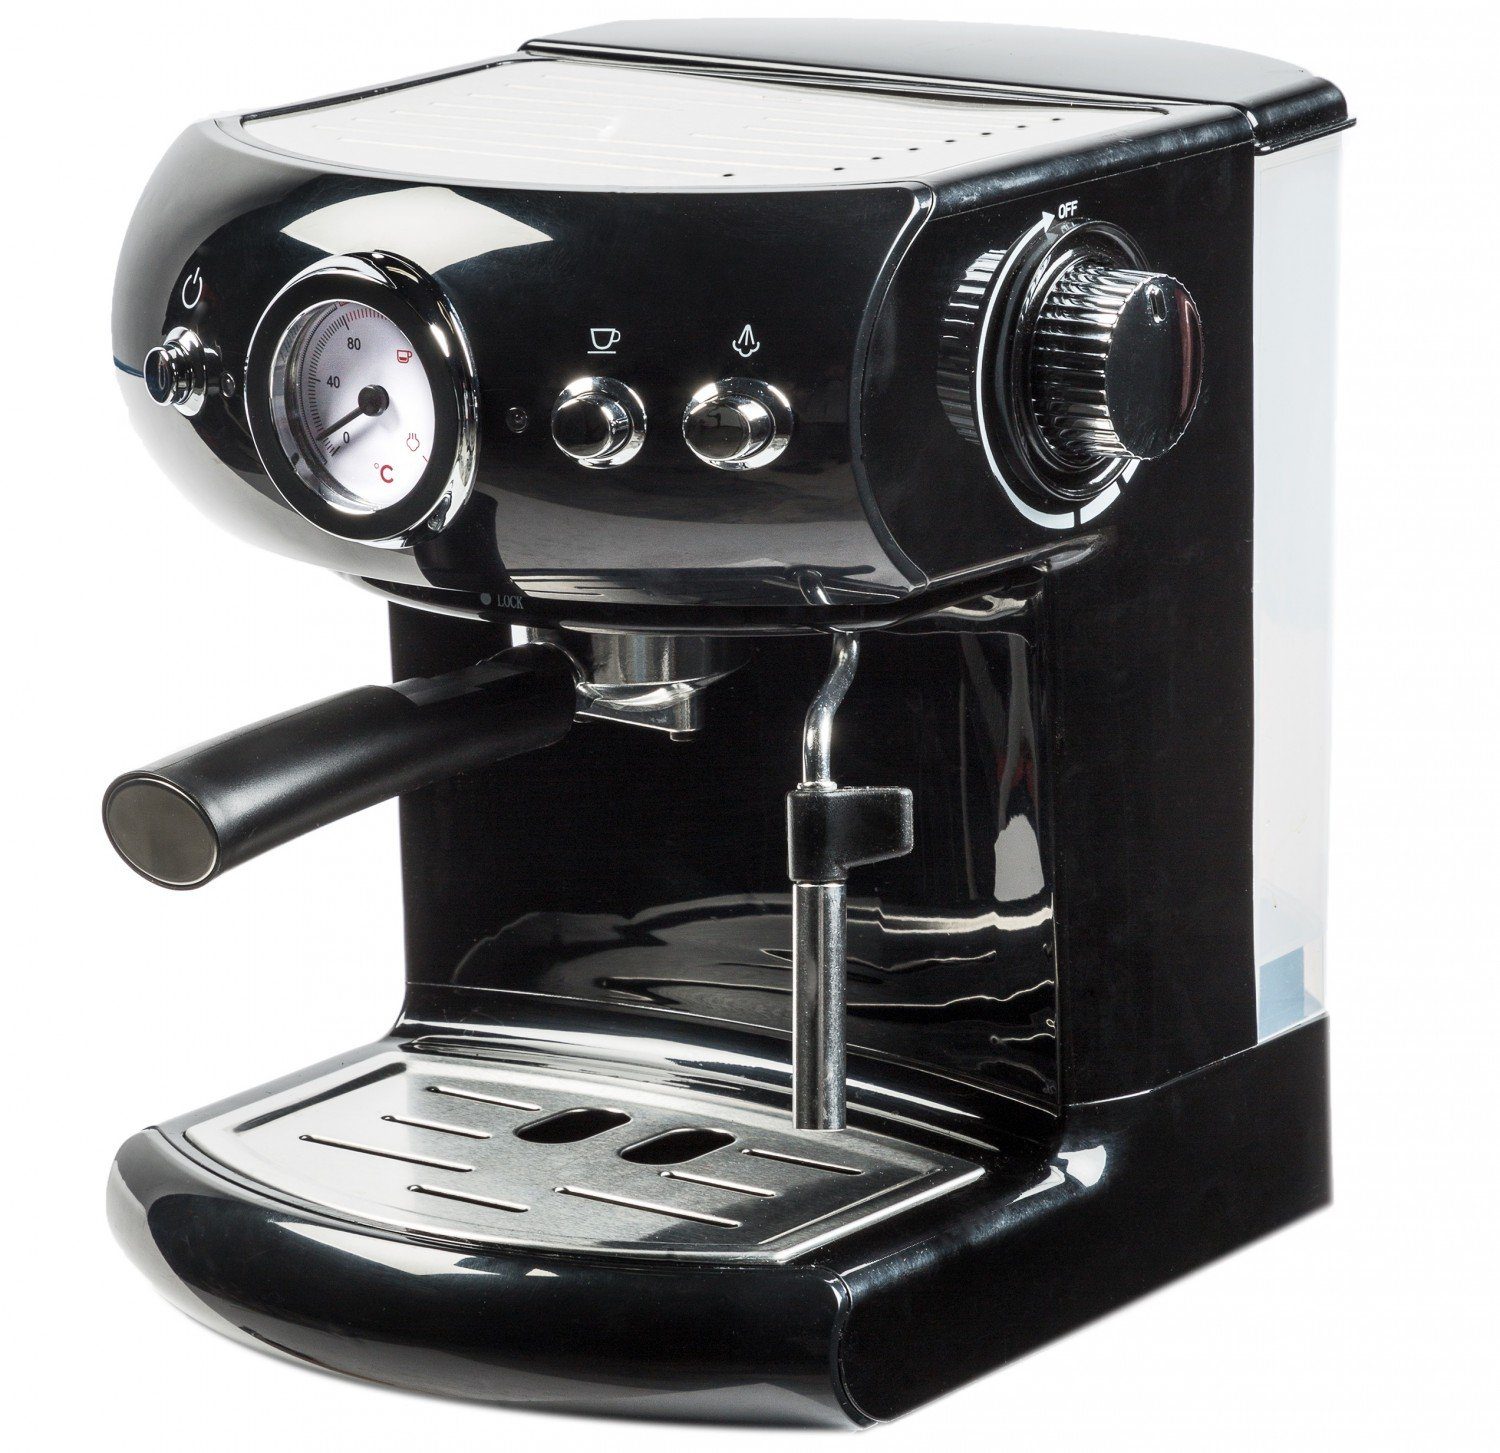 Acopino Espressomaschine Palermo, Kompakte, unkomplizierte Espressomaschine, Manometer